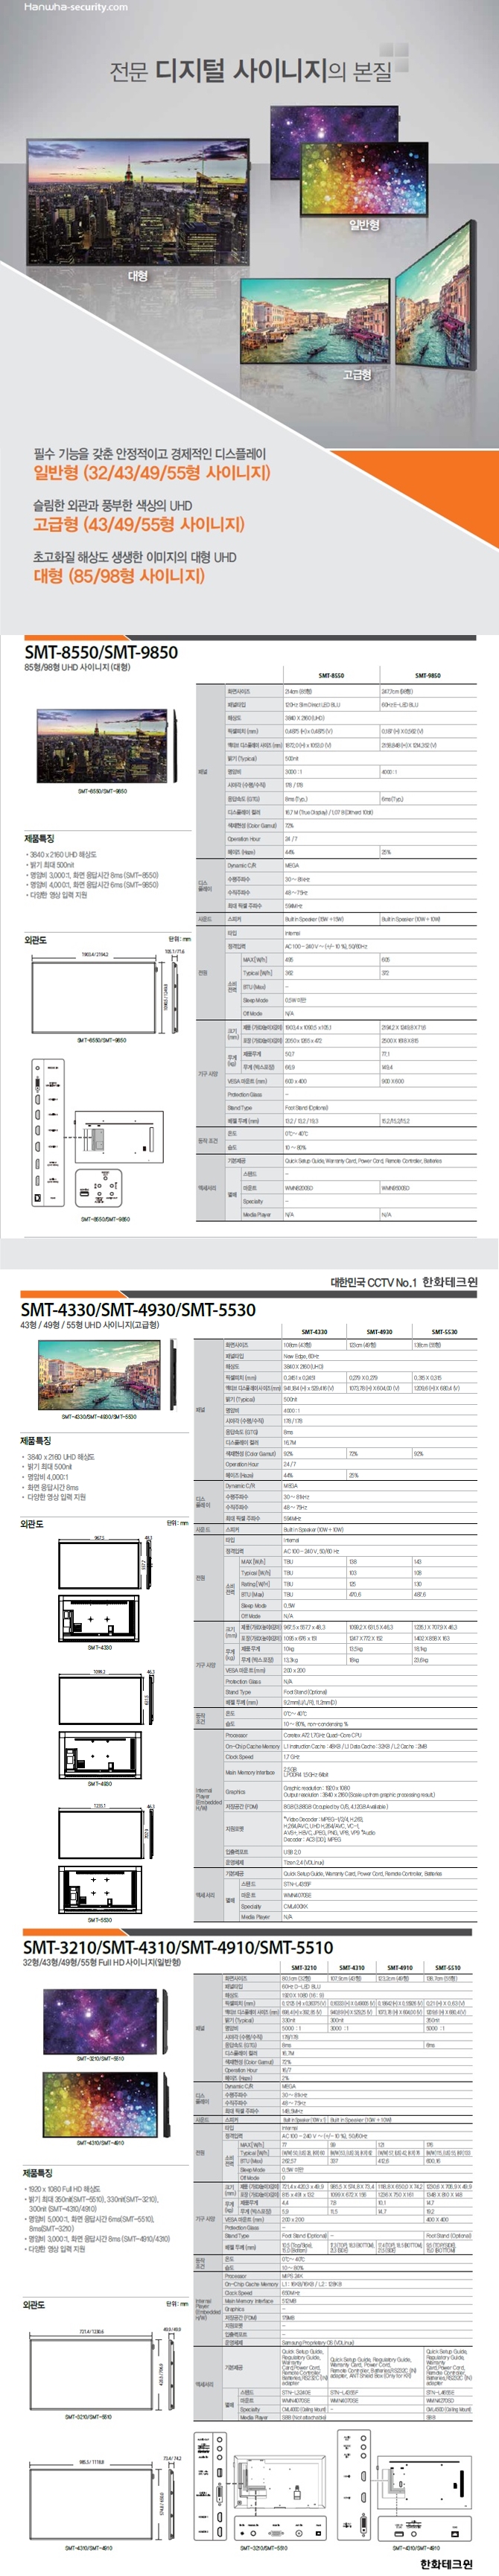 SMT-3210-1-vert_130844.jpg